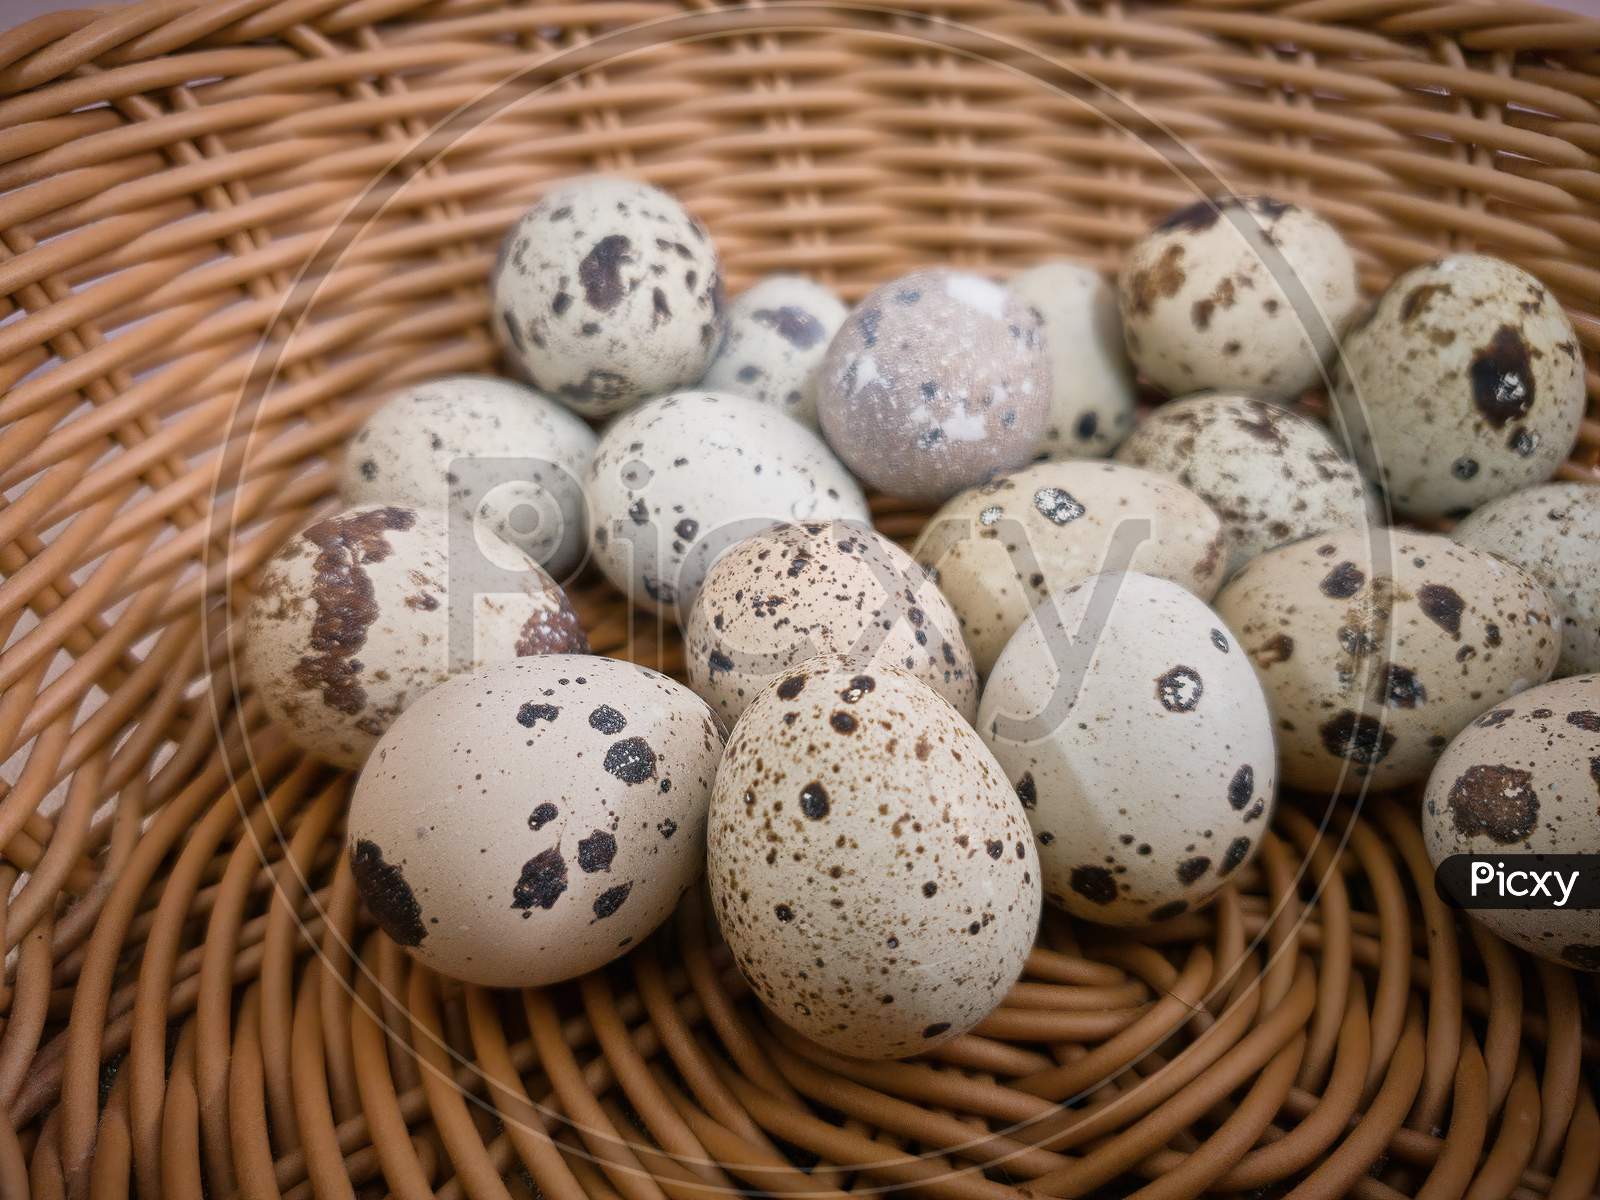 Quail Eggs On Basket, Close-Up View